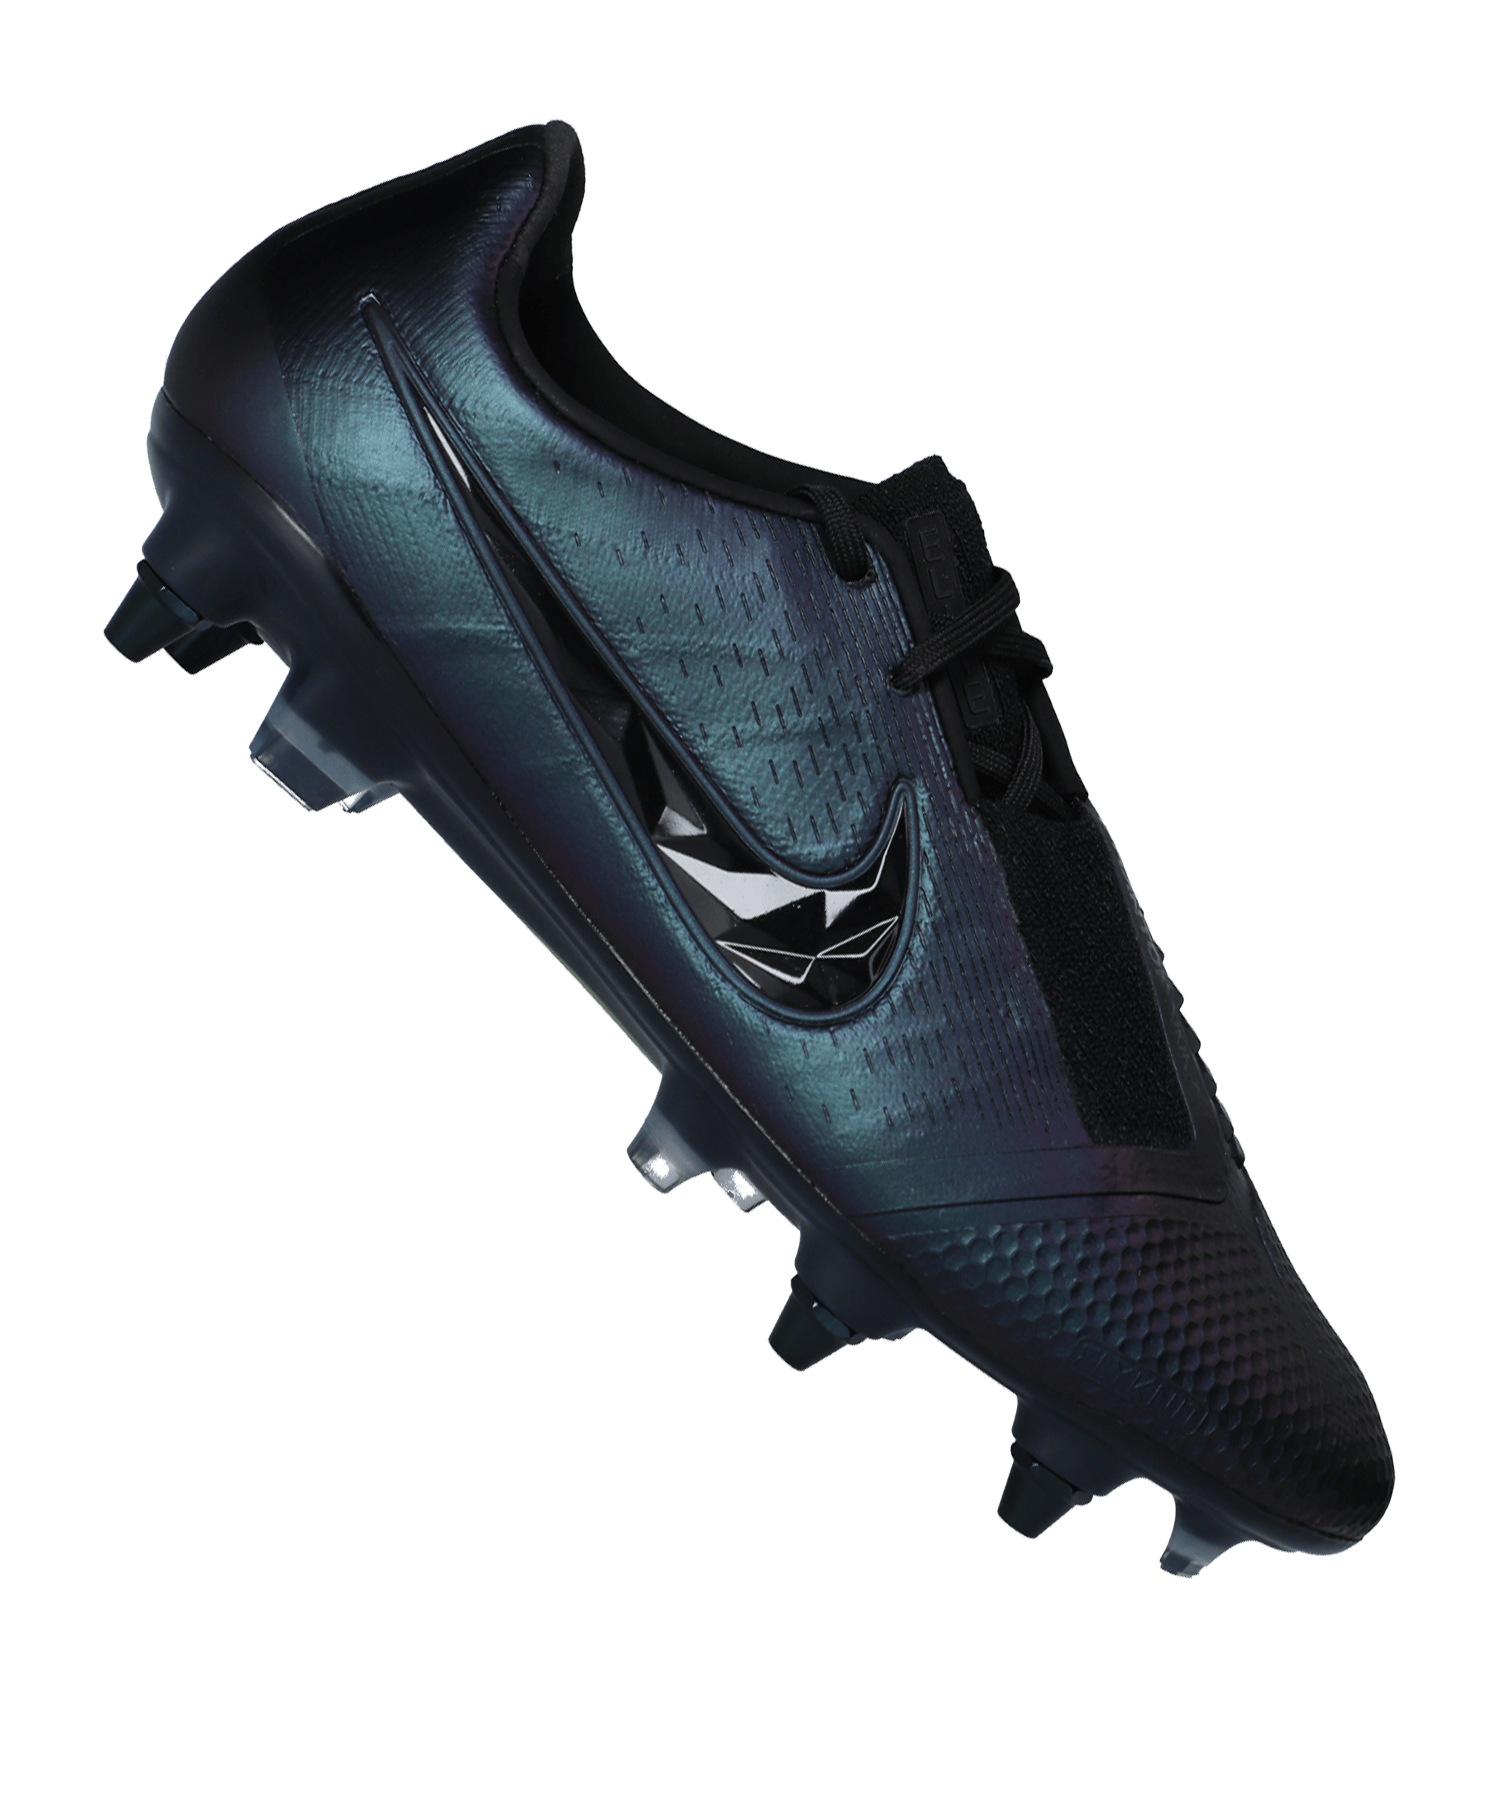 Nike Jr. Phantom Venom Academy TF Turf Soccer Shoe